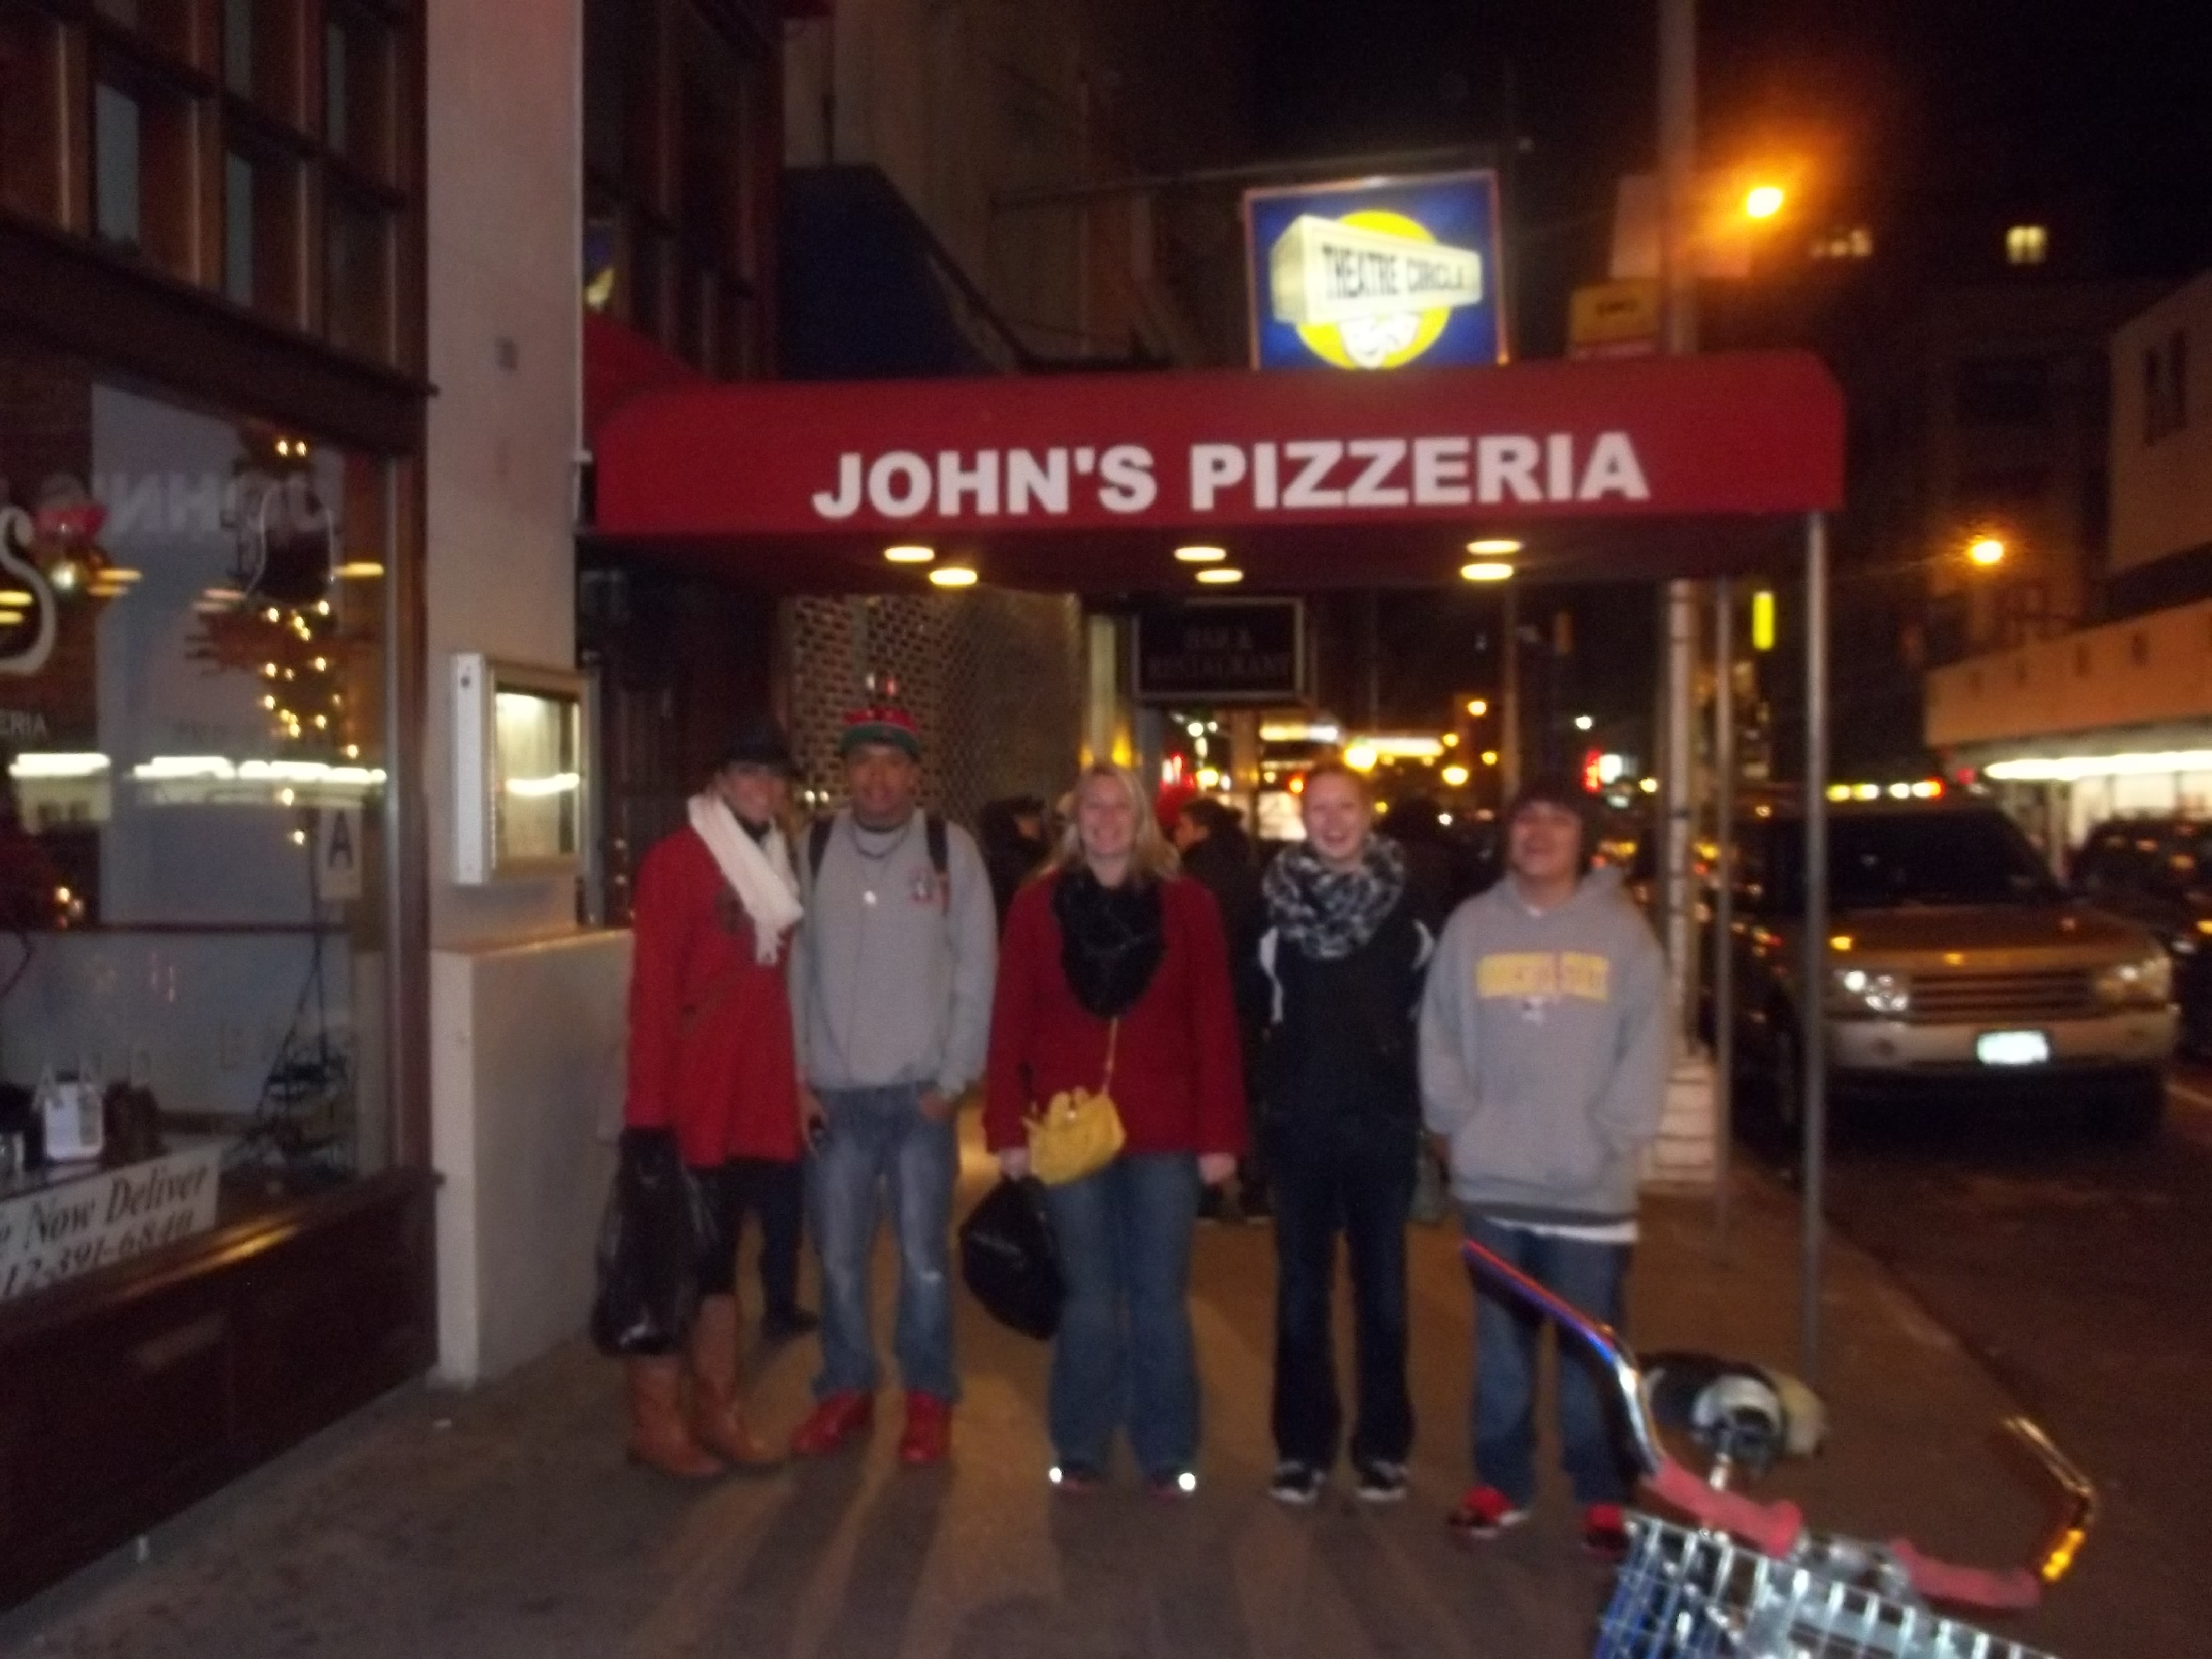 Everyone loved John’s Pizzeria!